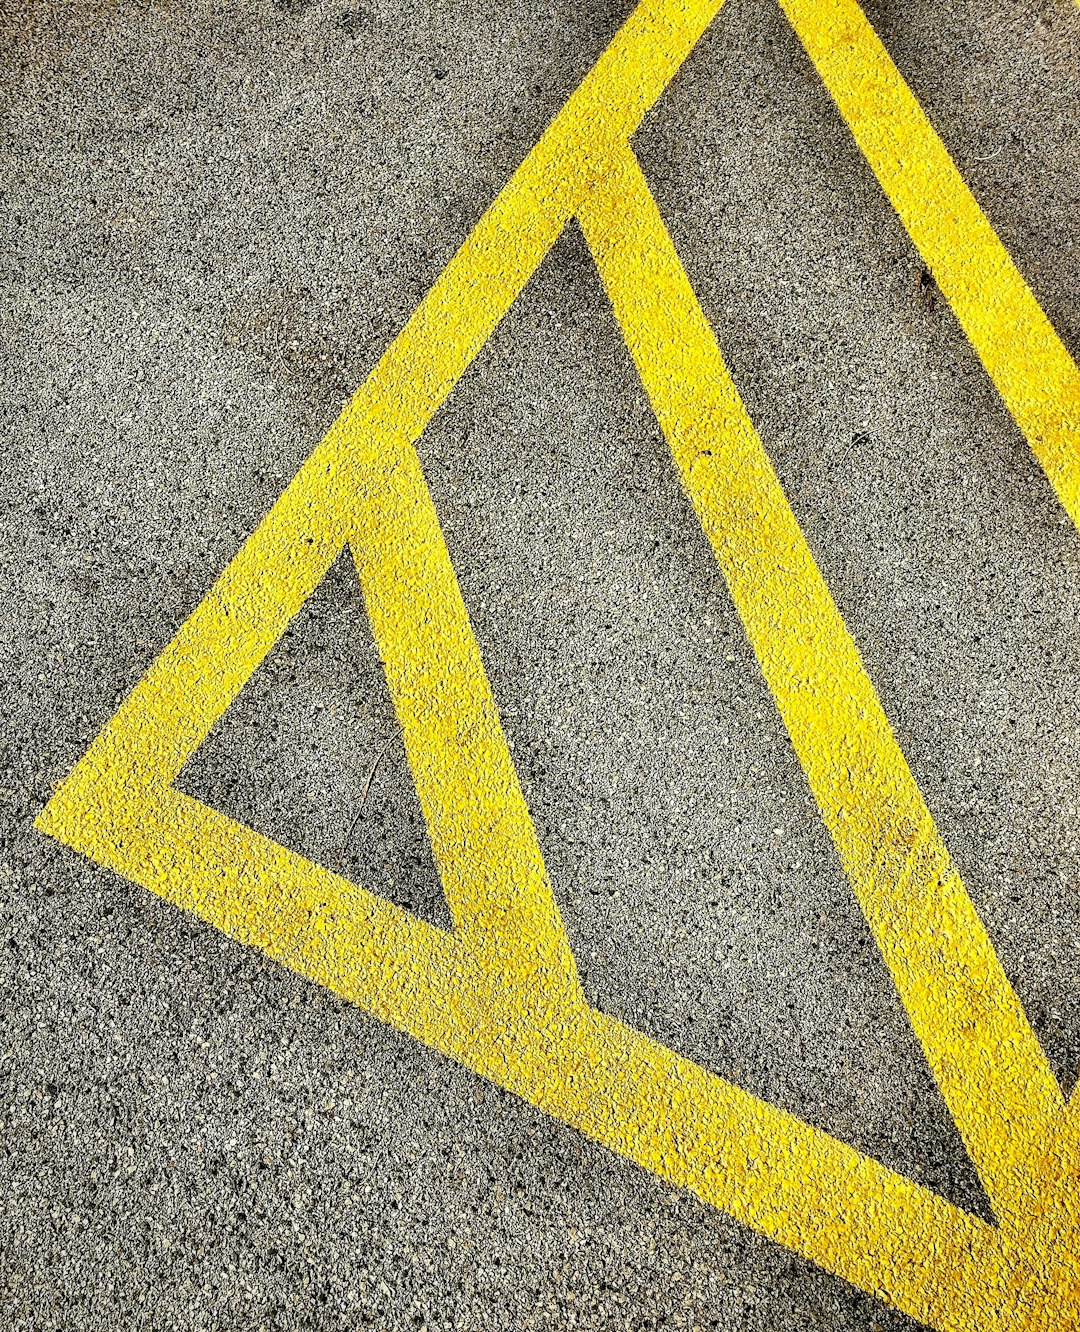 gray and yellow concrete pavement close-up photo